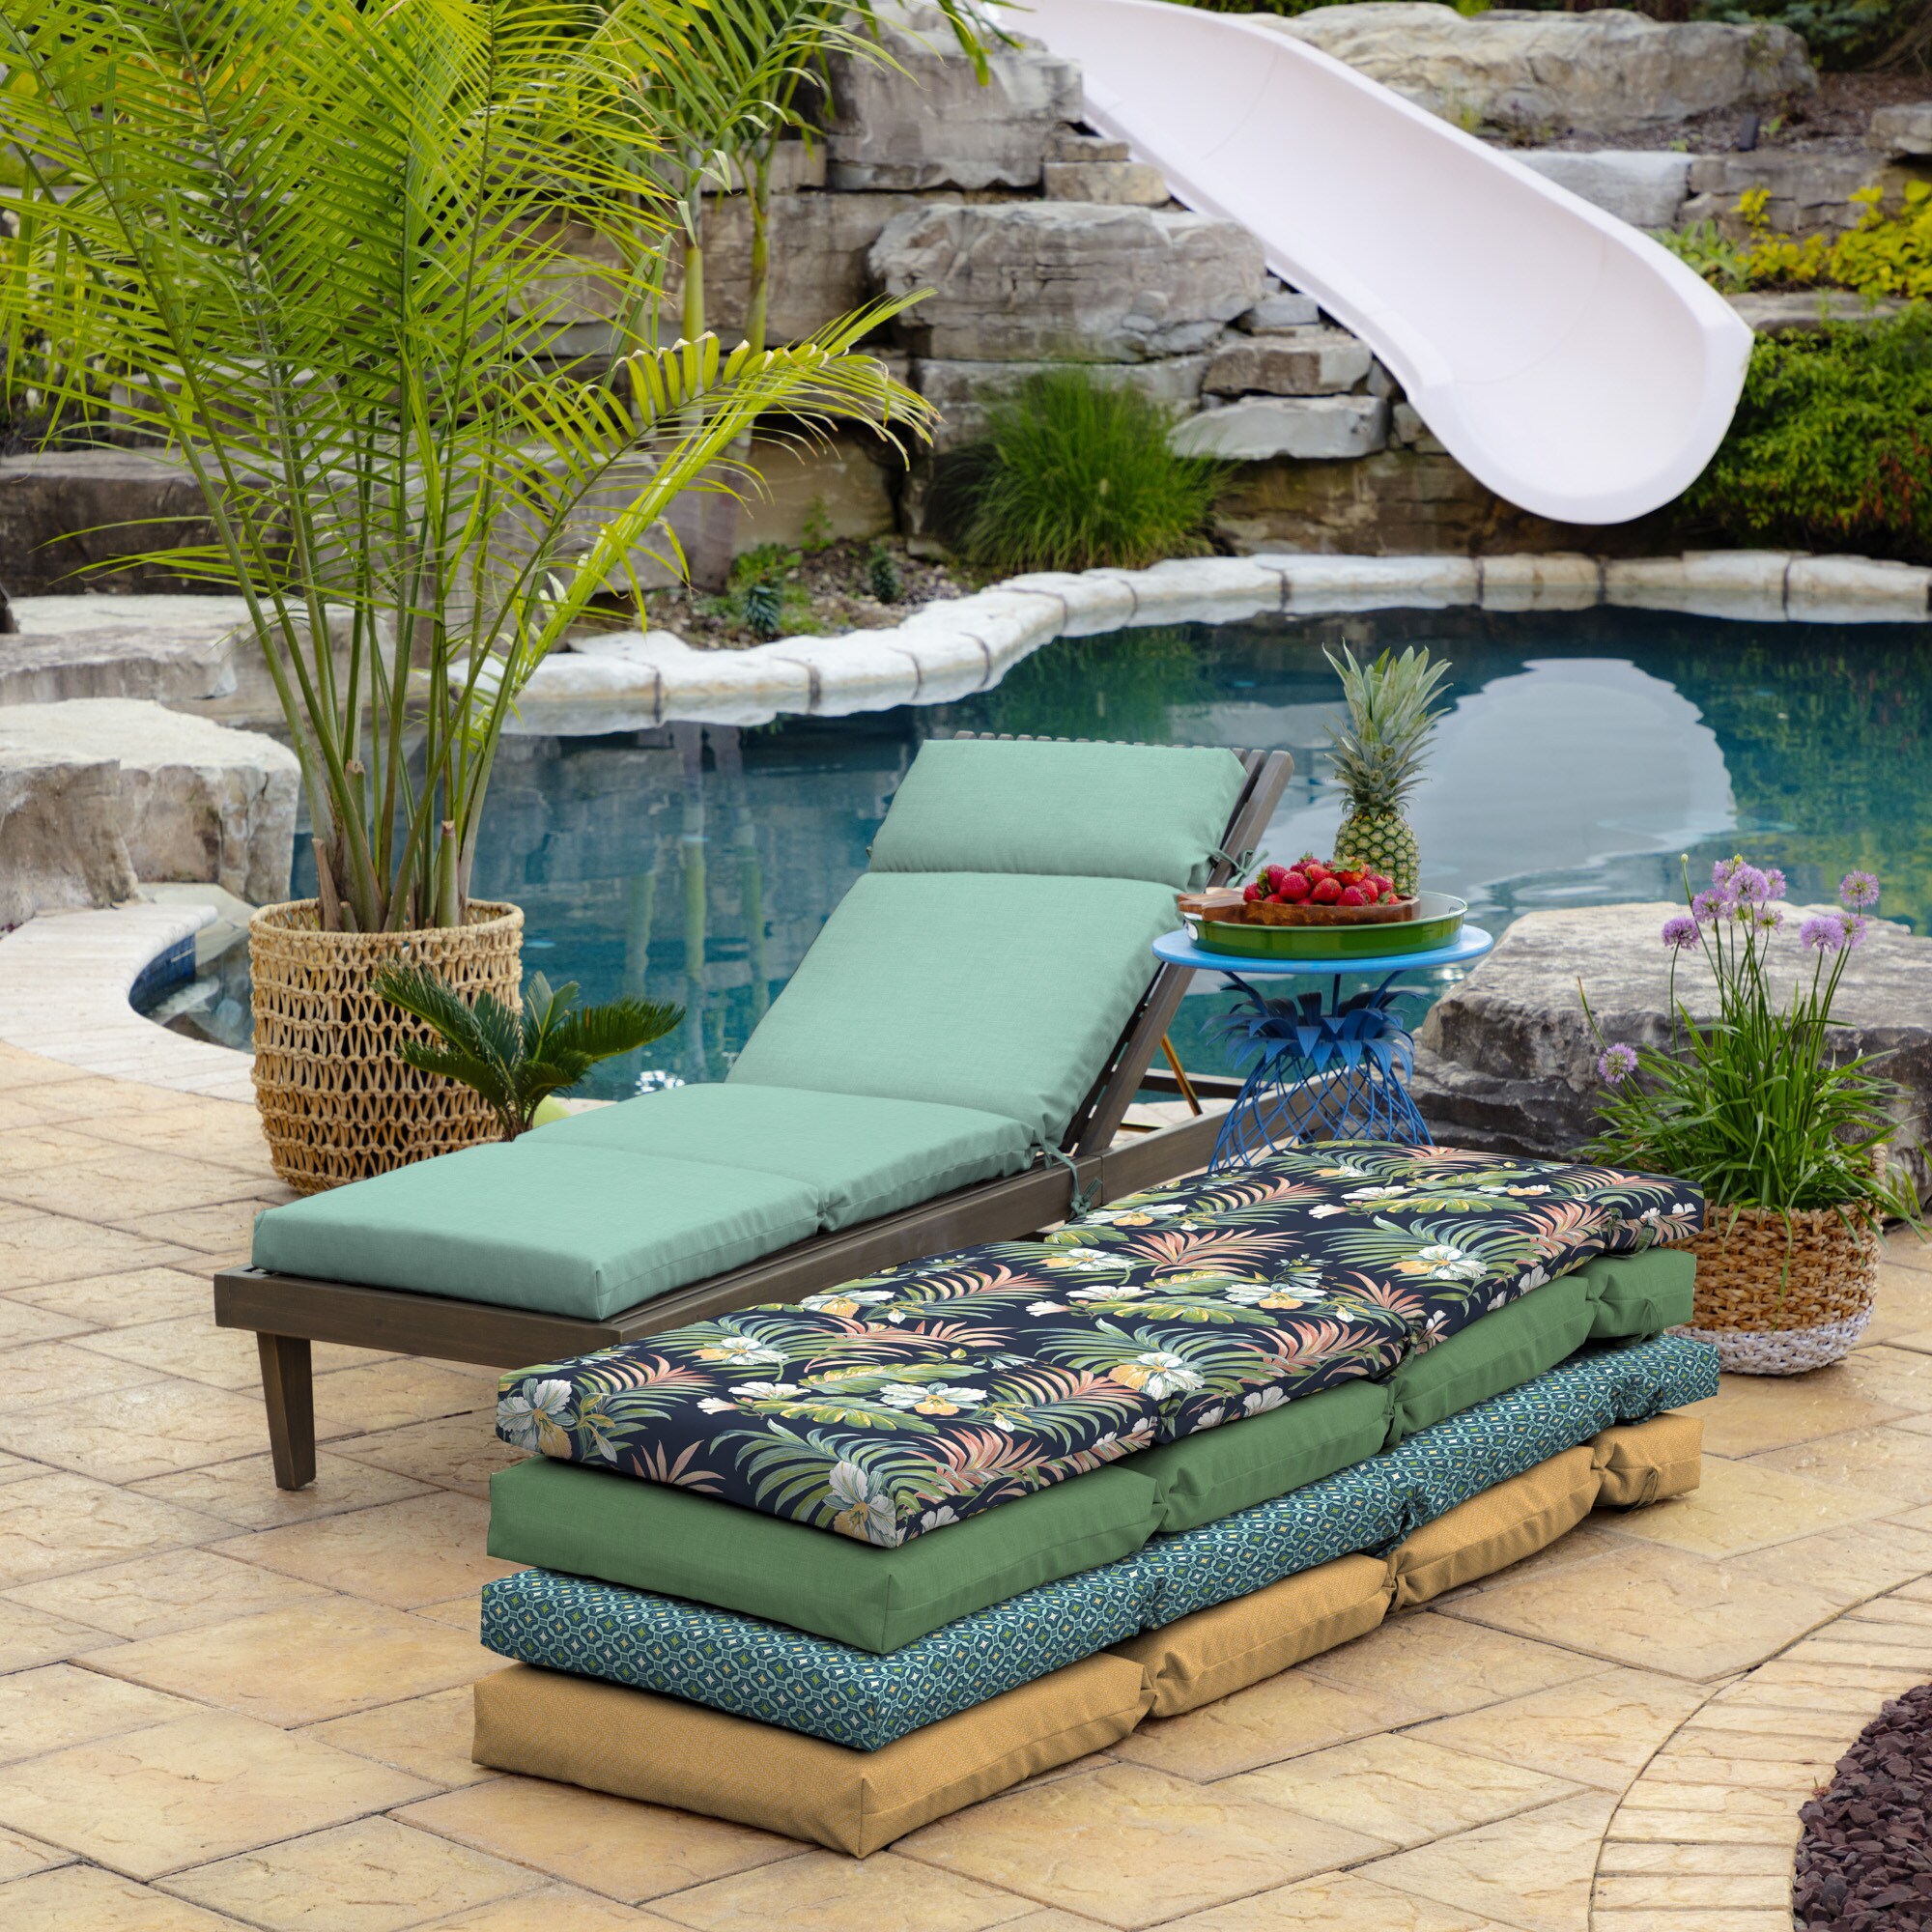 Chaise Lounge Cushion Green Blue Outdoor Patio Pool Deck Backyard Furniture Pad 